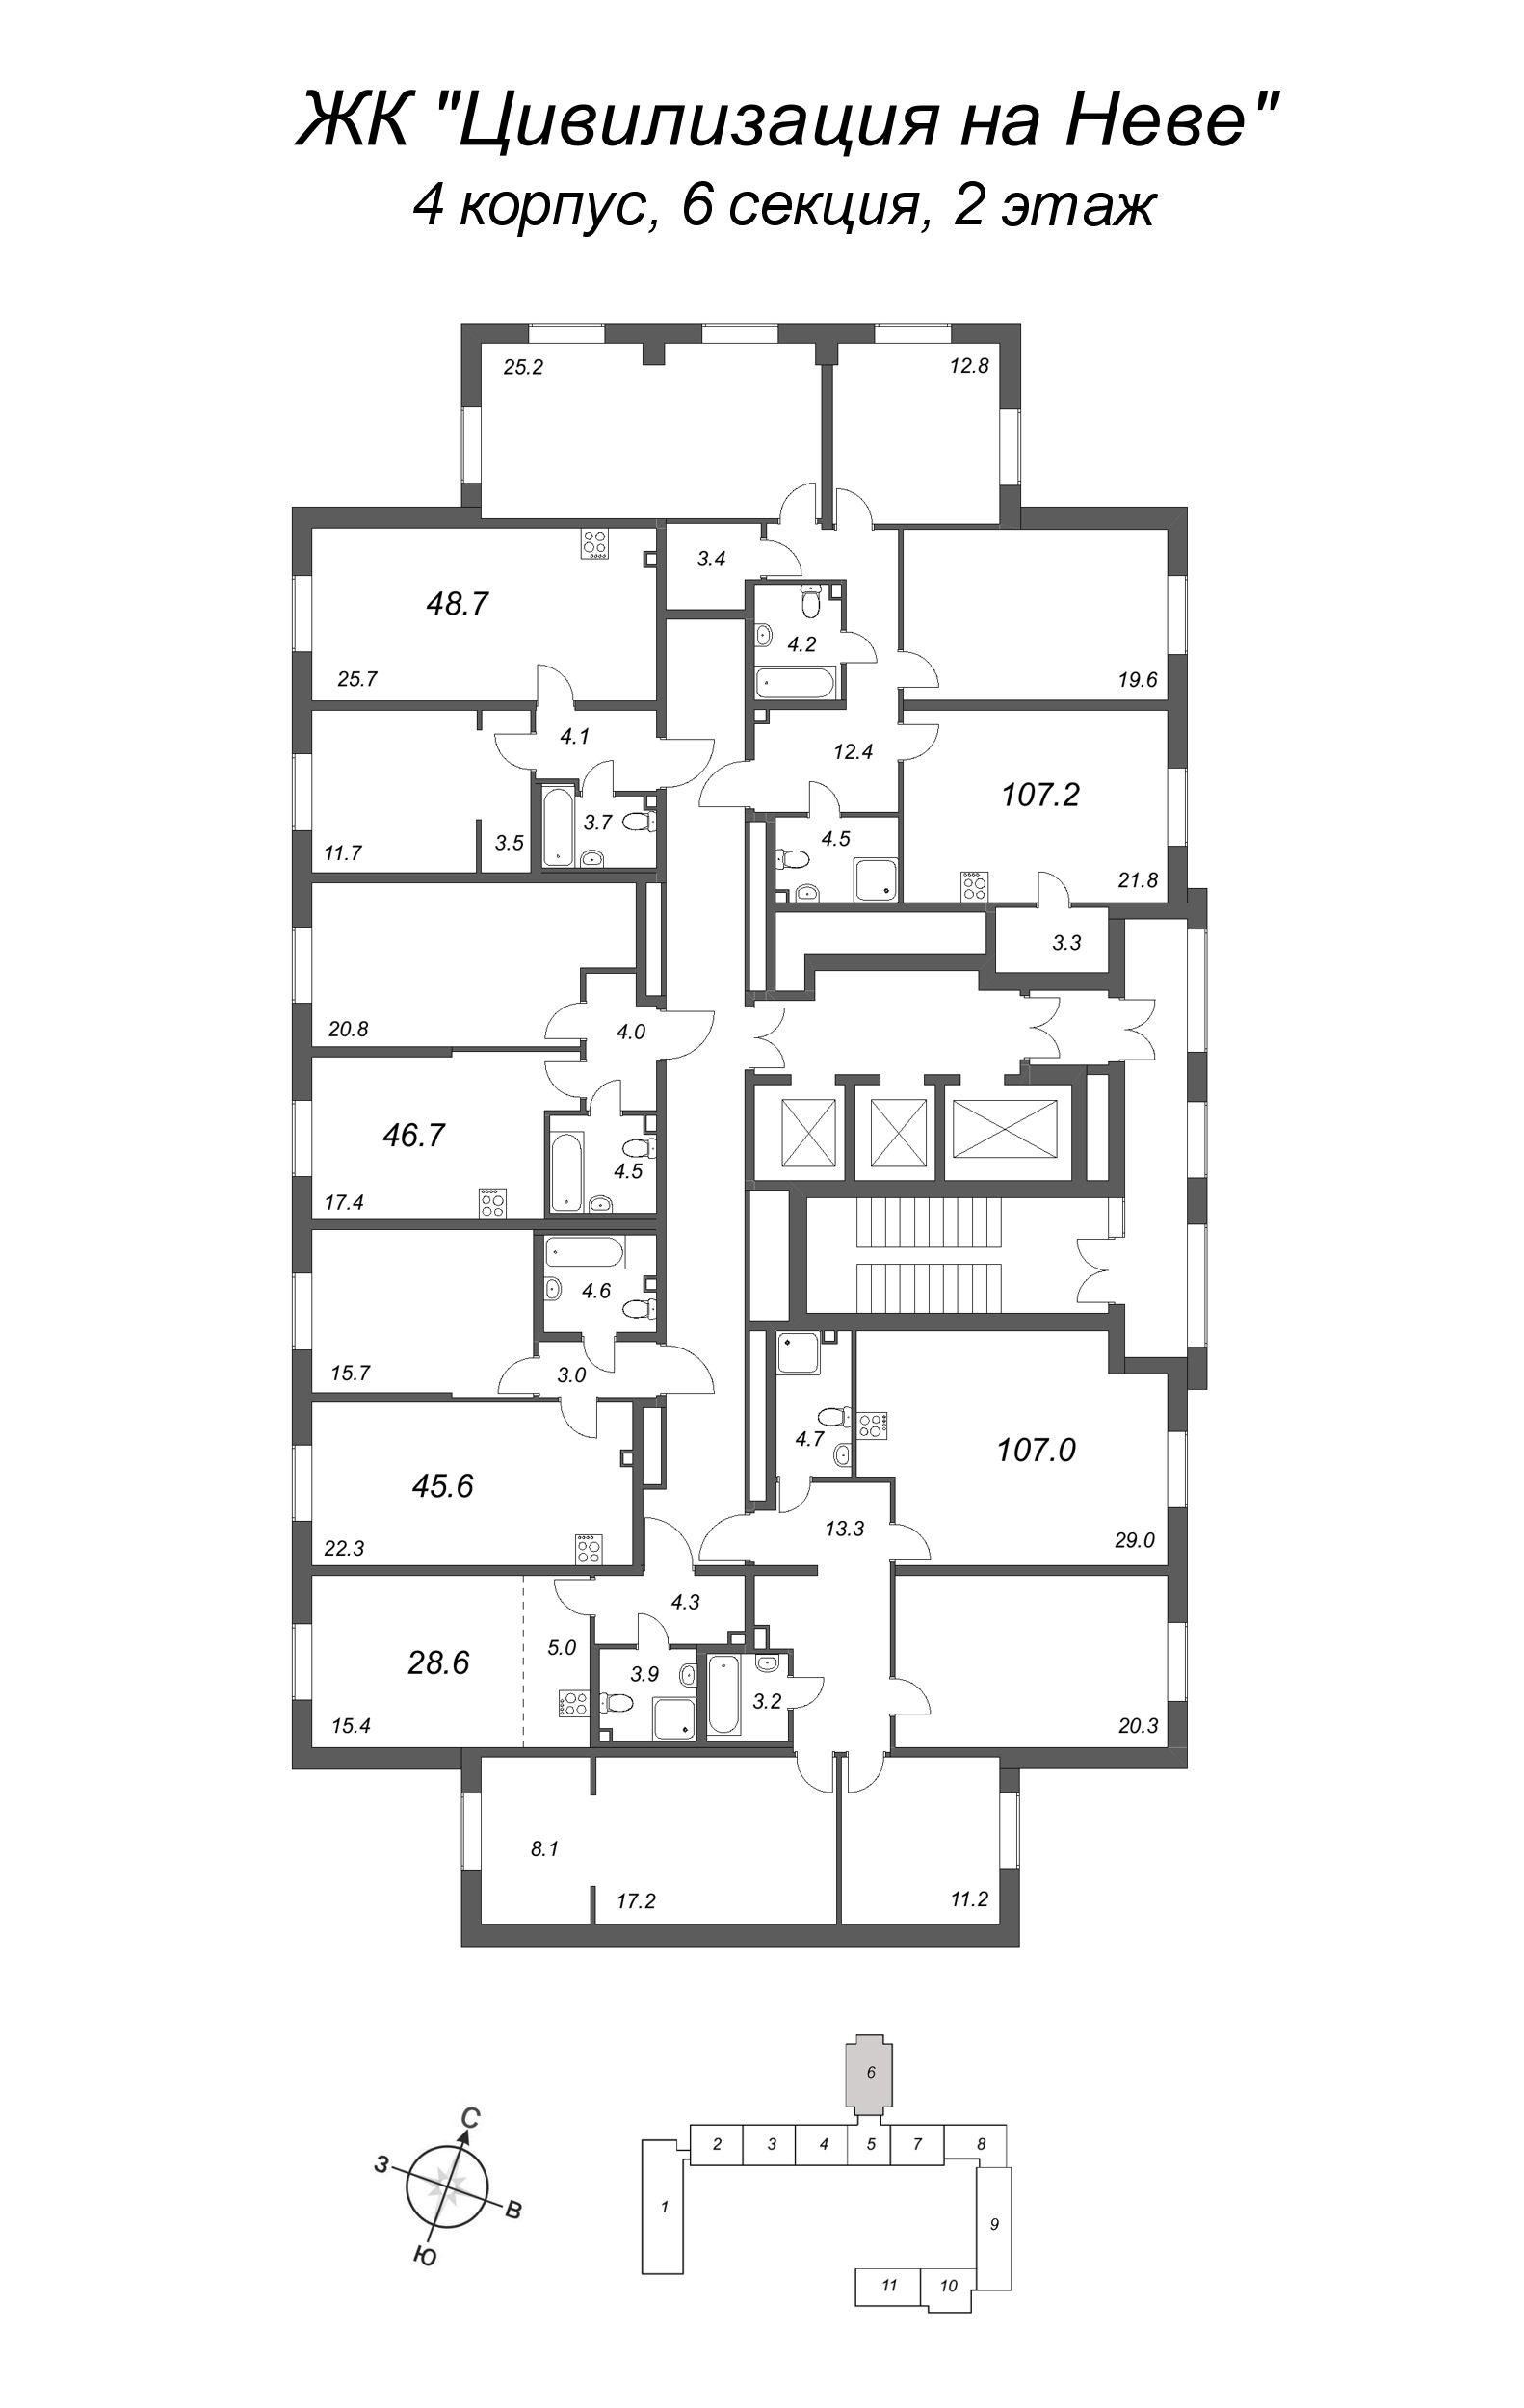 2-комнатная (Евро) квартира, 45.6 м² - планировка этажа